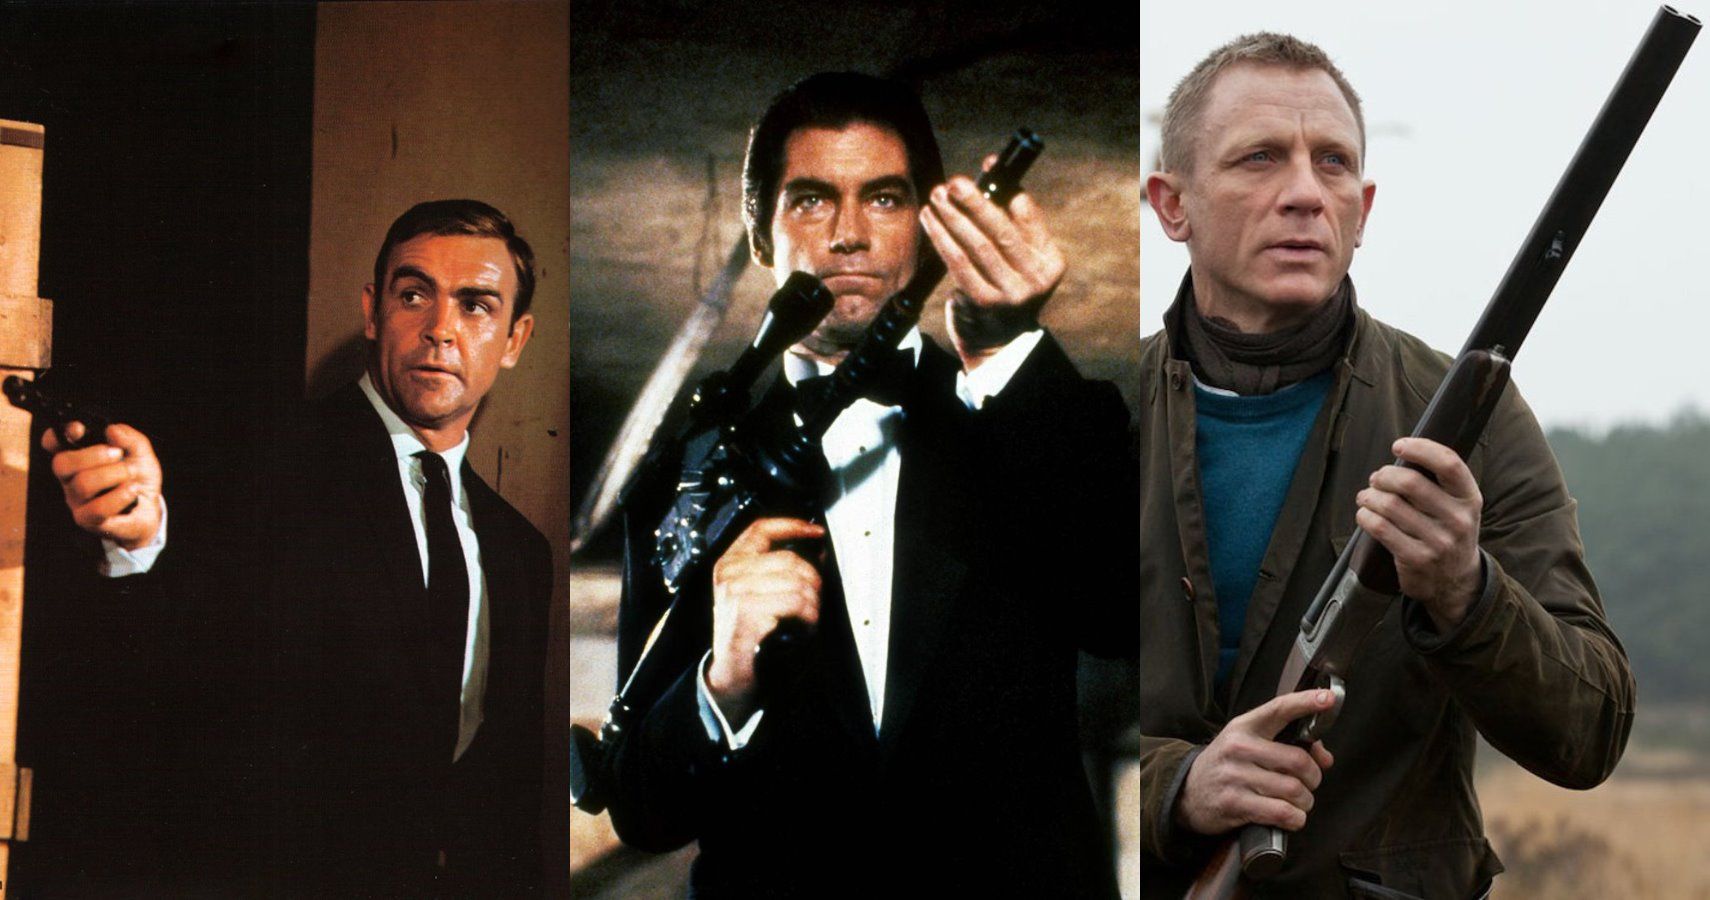 The Man Who Killed James Bond